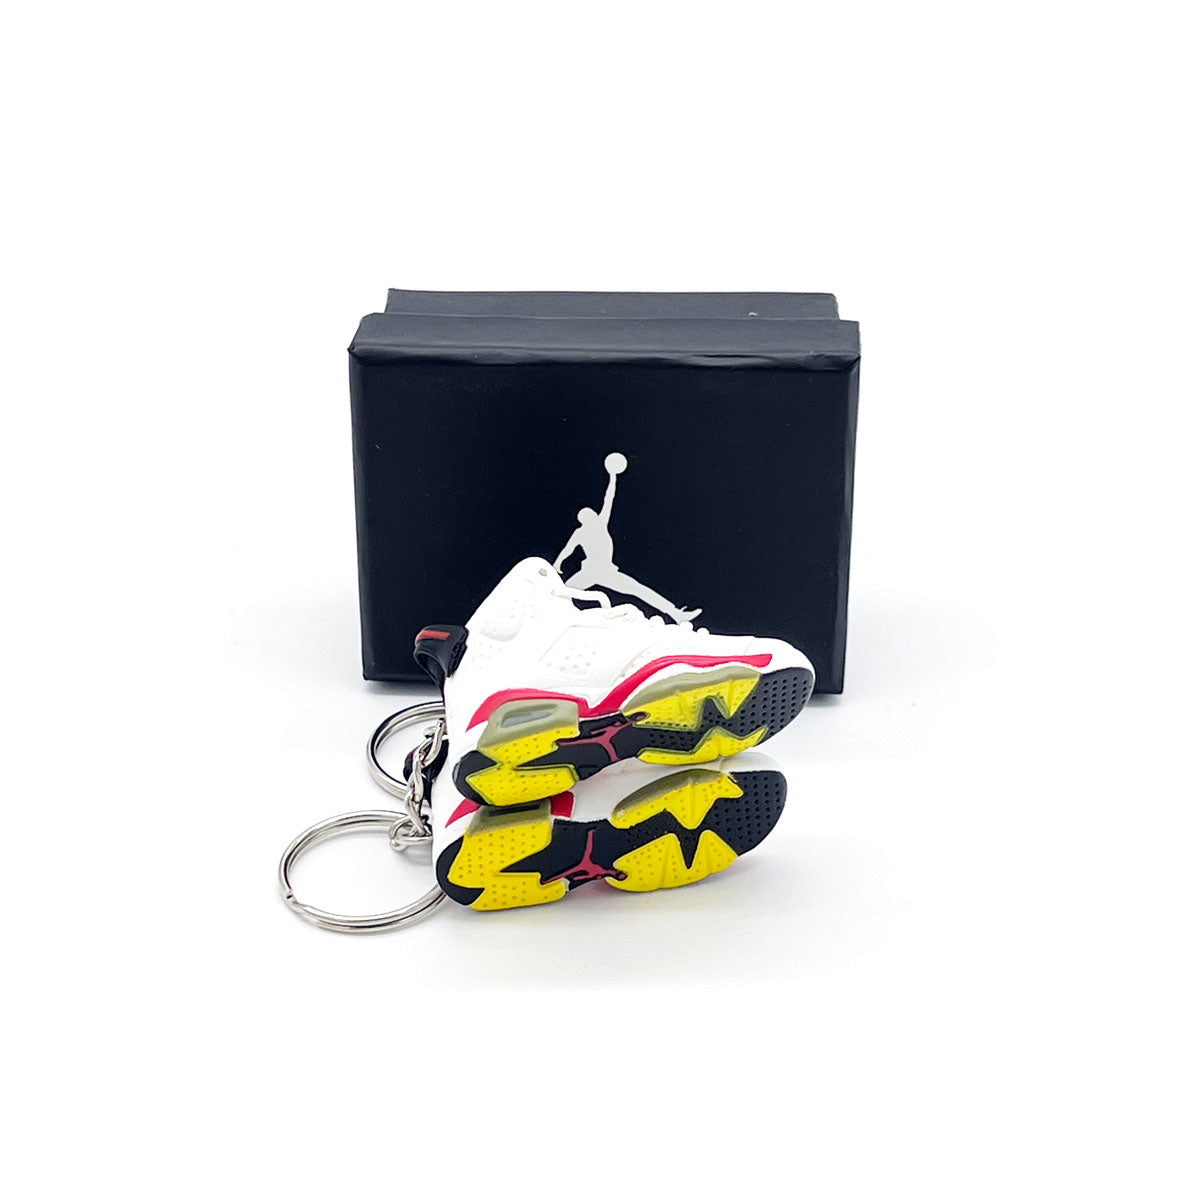 3D Sneaker Keychain- Air Jordan 6 White Infrared Pair